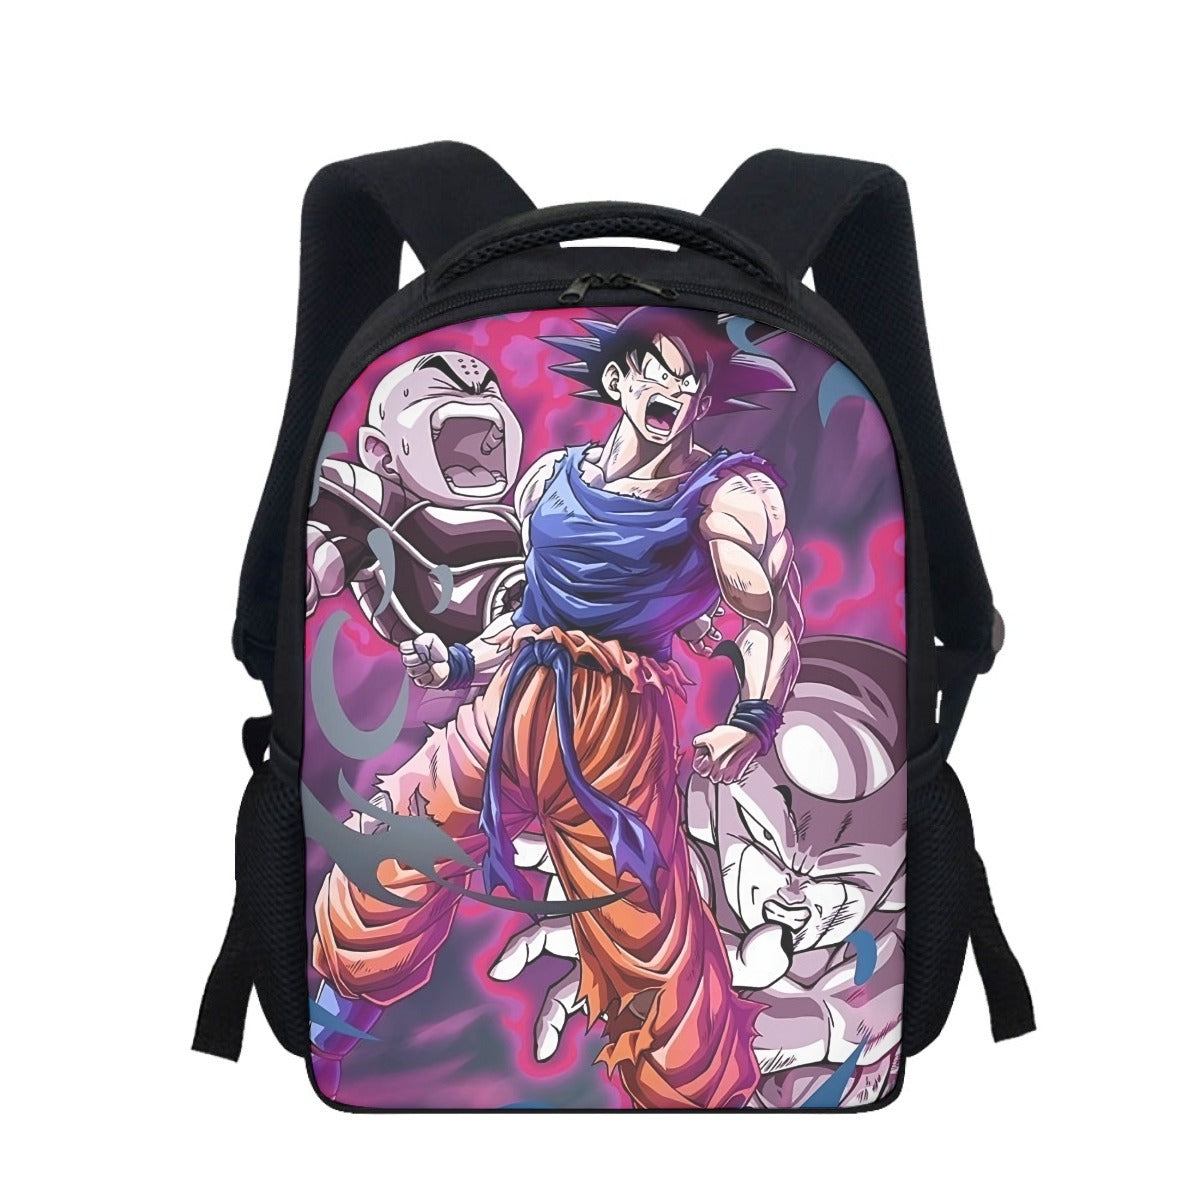 24) Son Goku Backpack Teenagers Laptop Rucksack Kids Boys Girls